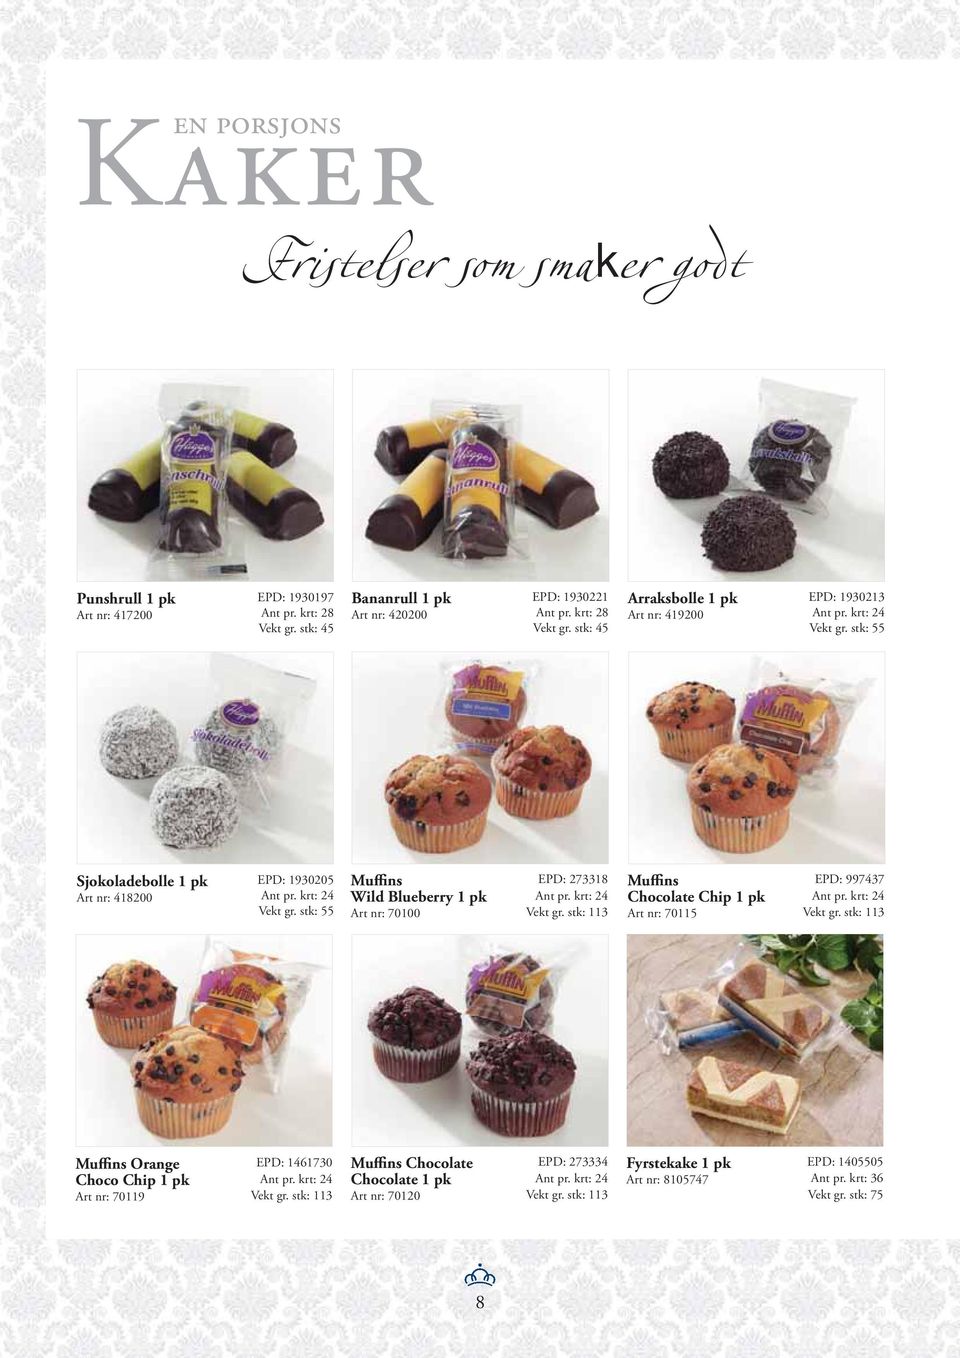 stk: 55 Muffins Wild Blueberry 1 pk Art nr: 70100 EPD: 273318 Vekt gr. stk: 113 Muffins Chocolate Chip 1 pk Art nr: 70115 EPD: 997437 Vekt gr.